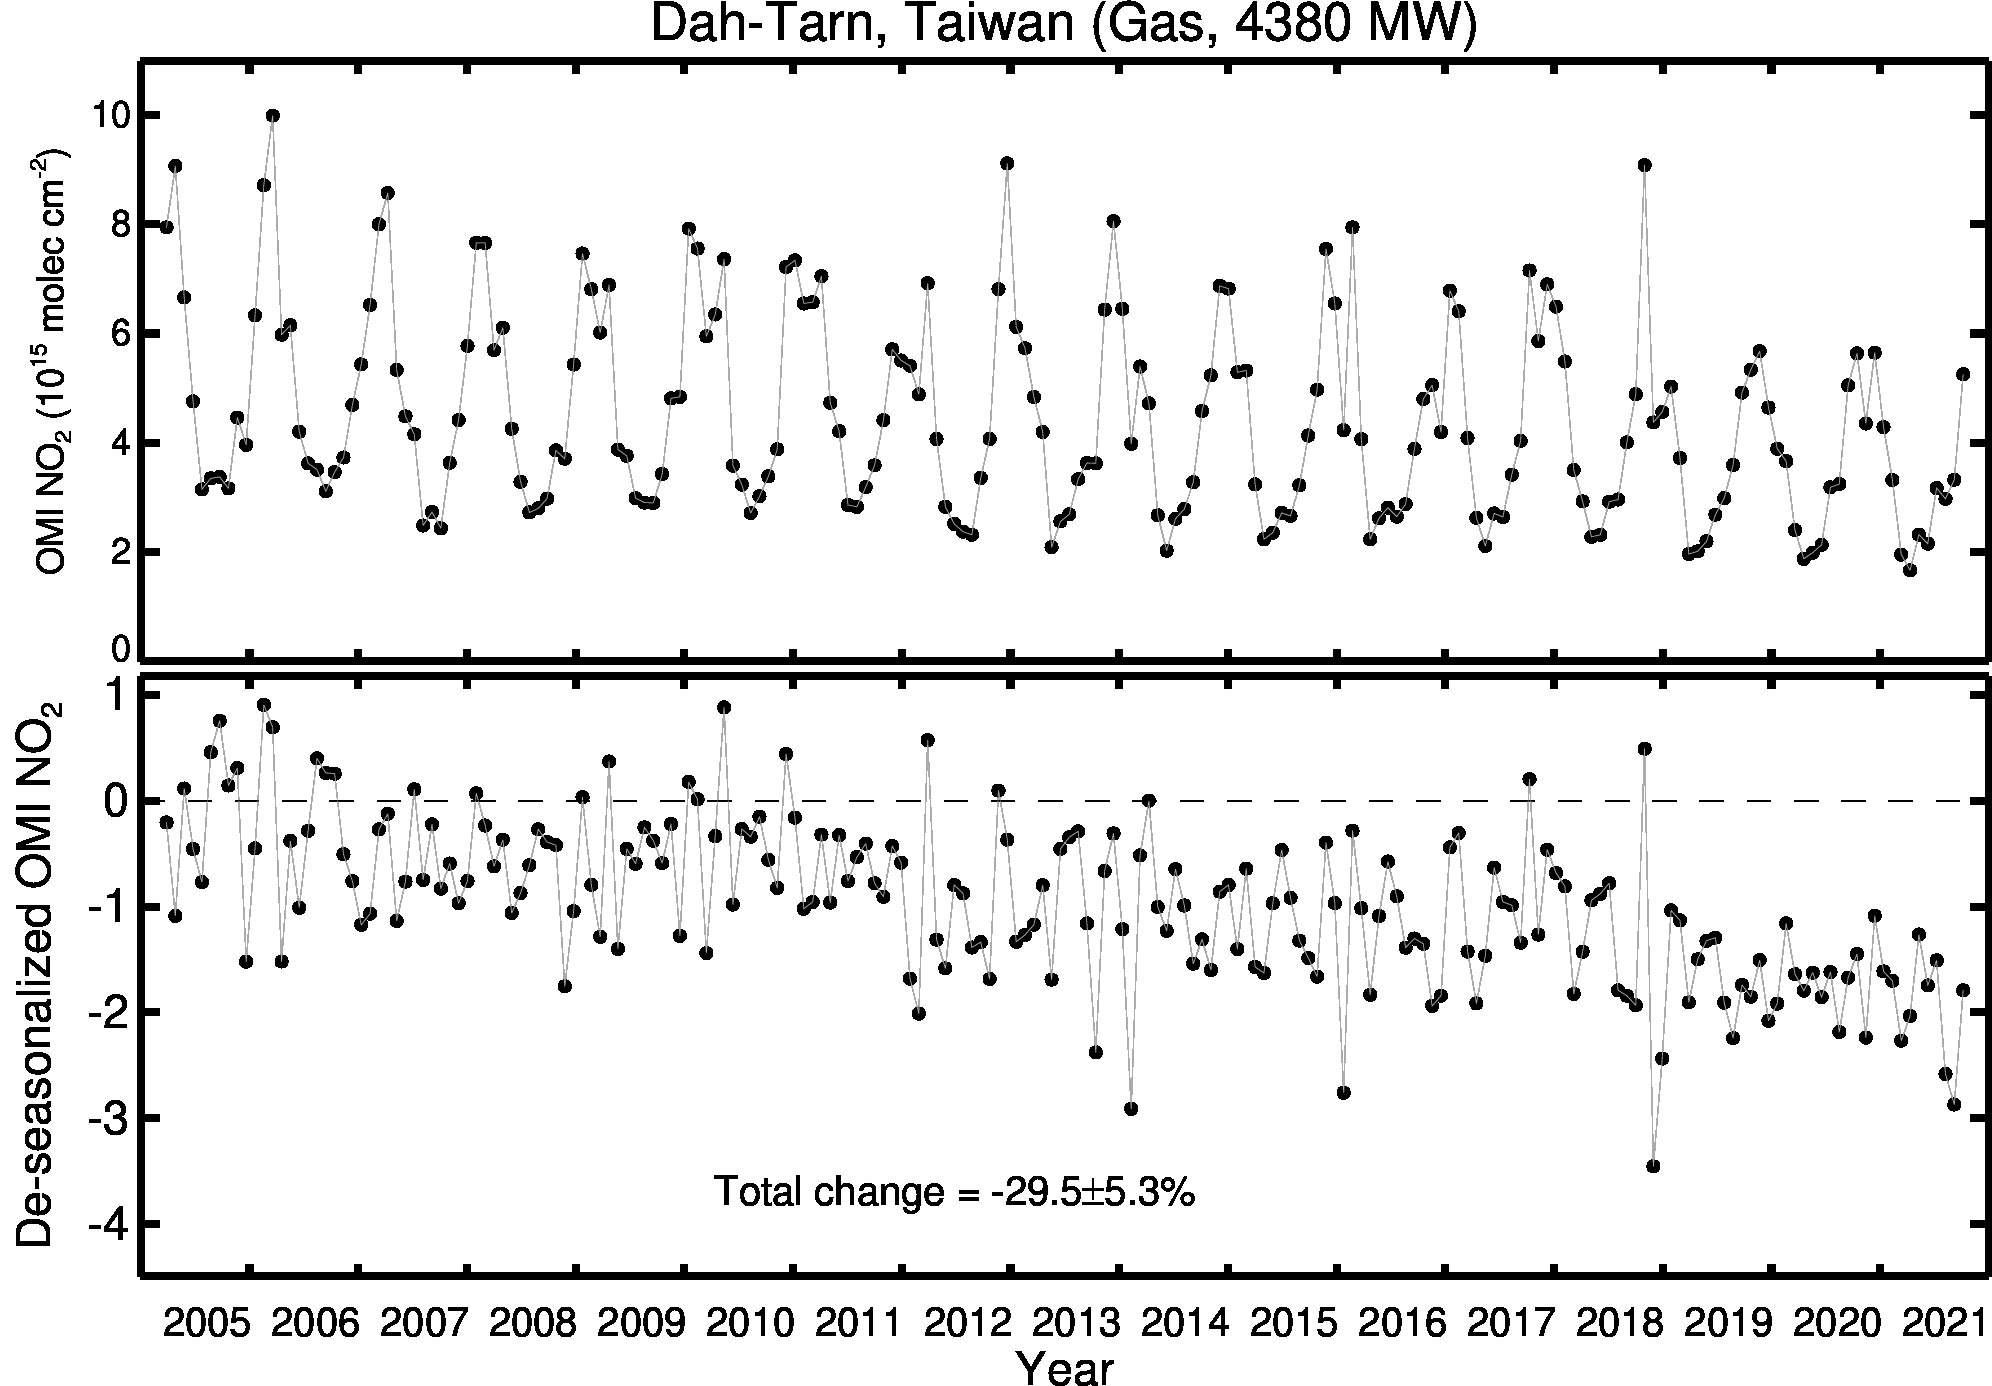 Dah Tarn Line Plot 2005-2021